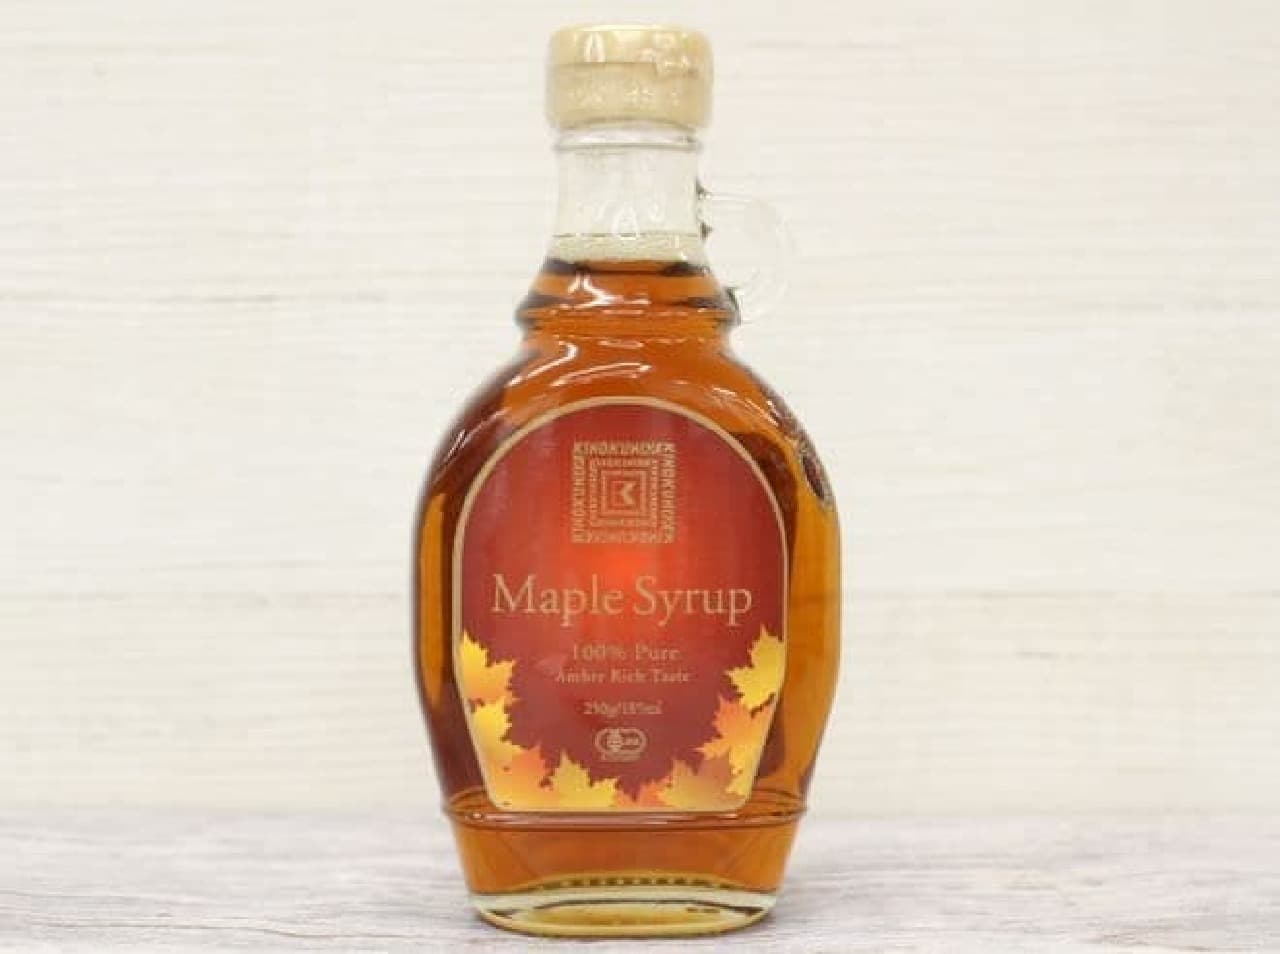 KINOKUNIYA "Pure Maple Syrup"